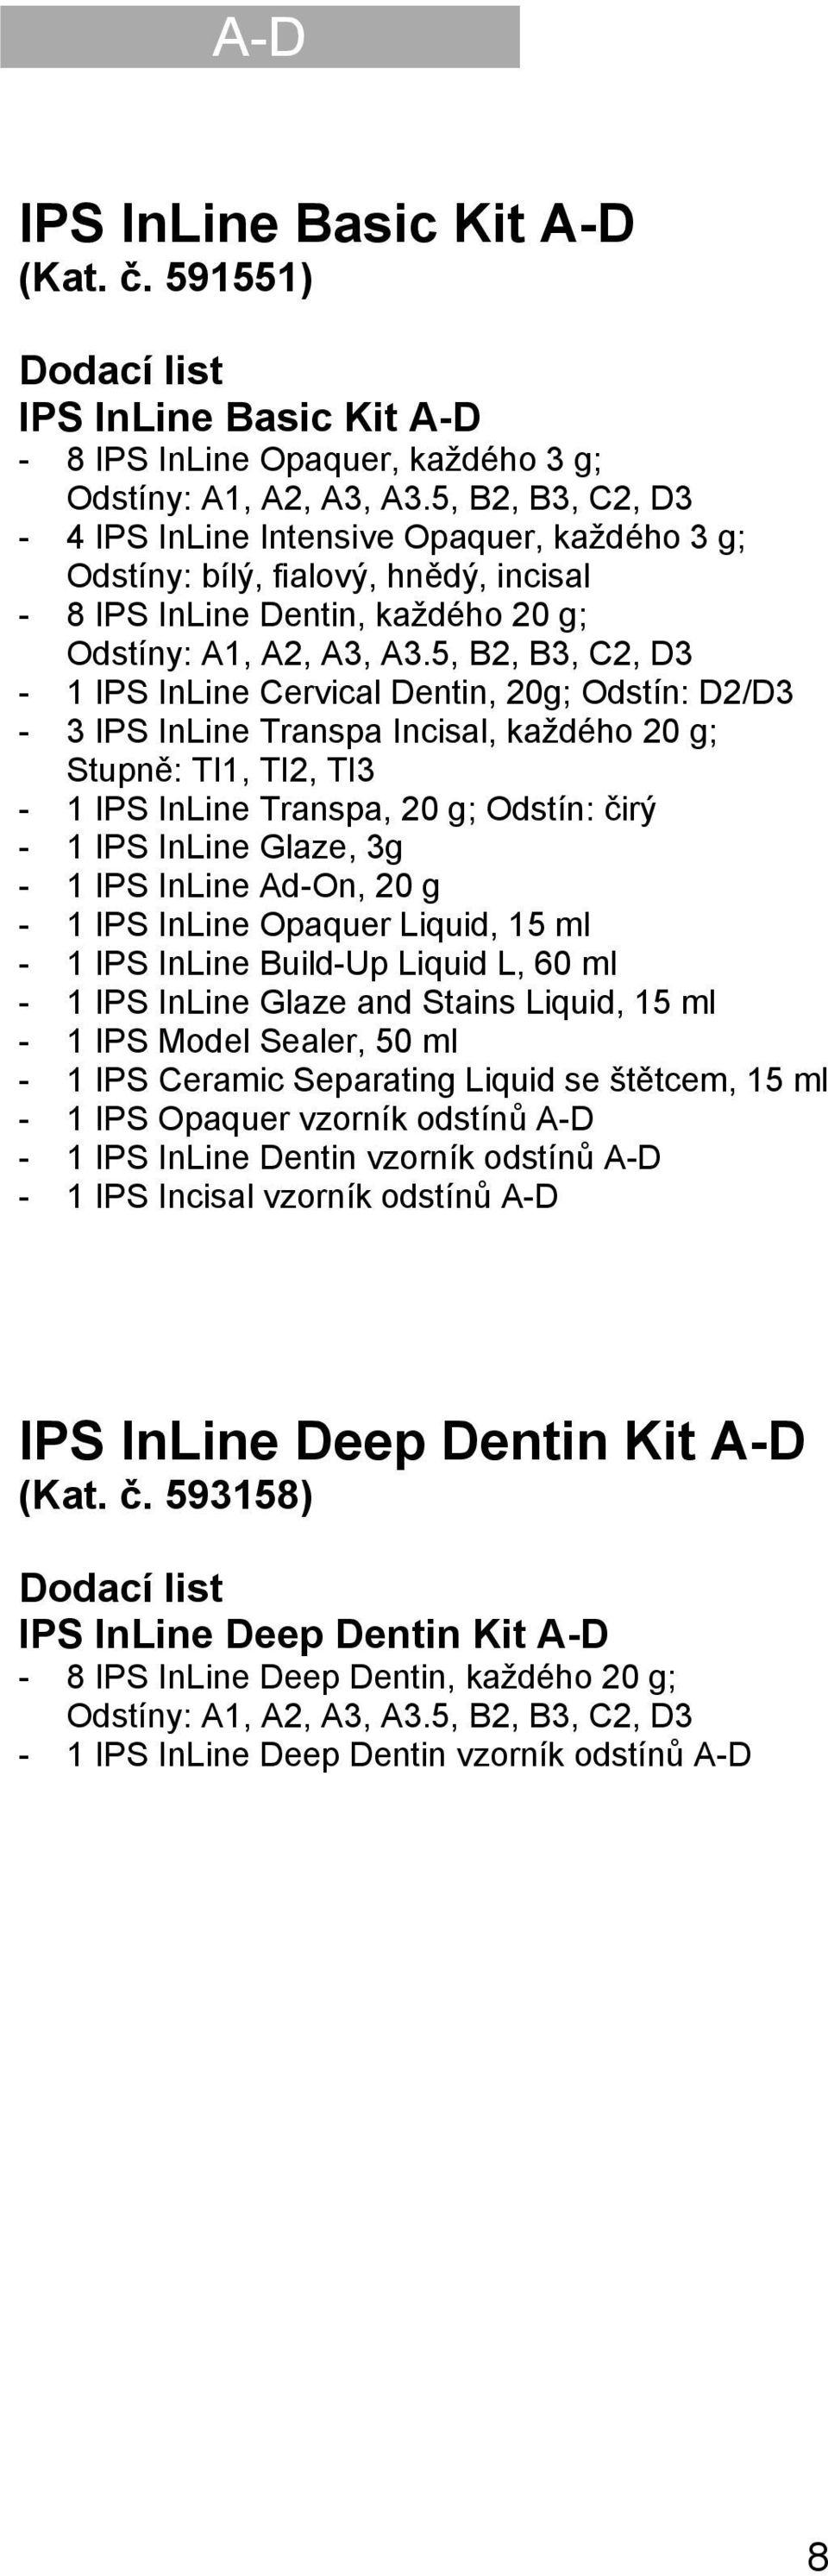 5, B2, B3, C2, D3-1 IPS InLine Cervical Dentin, 20g; Odstín: D2/D3-3 IPS InLine Transpa Incisal, každého 20 g; Stupně: TI1, TI2, TI3-1 IPS InLine Transpa, 20 g; Odstín: čirý - 1 IPS InLine Glaze, 3g